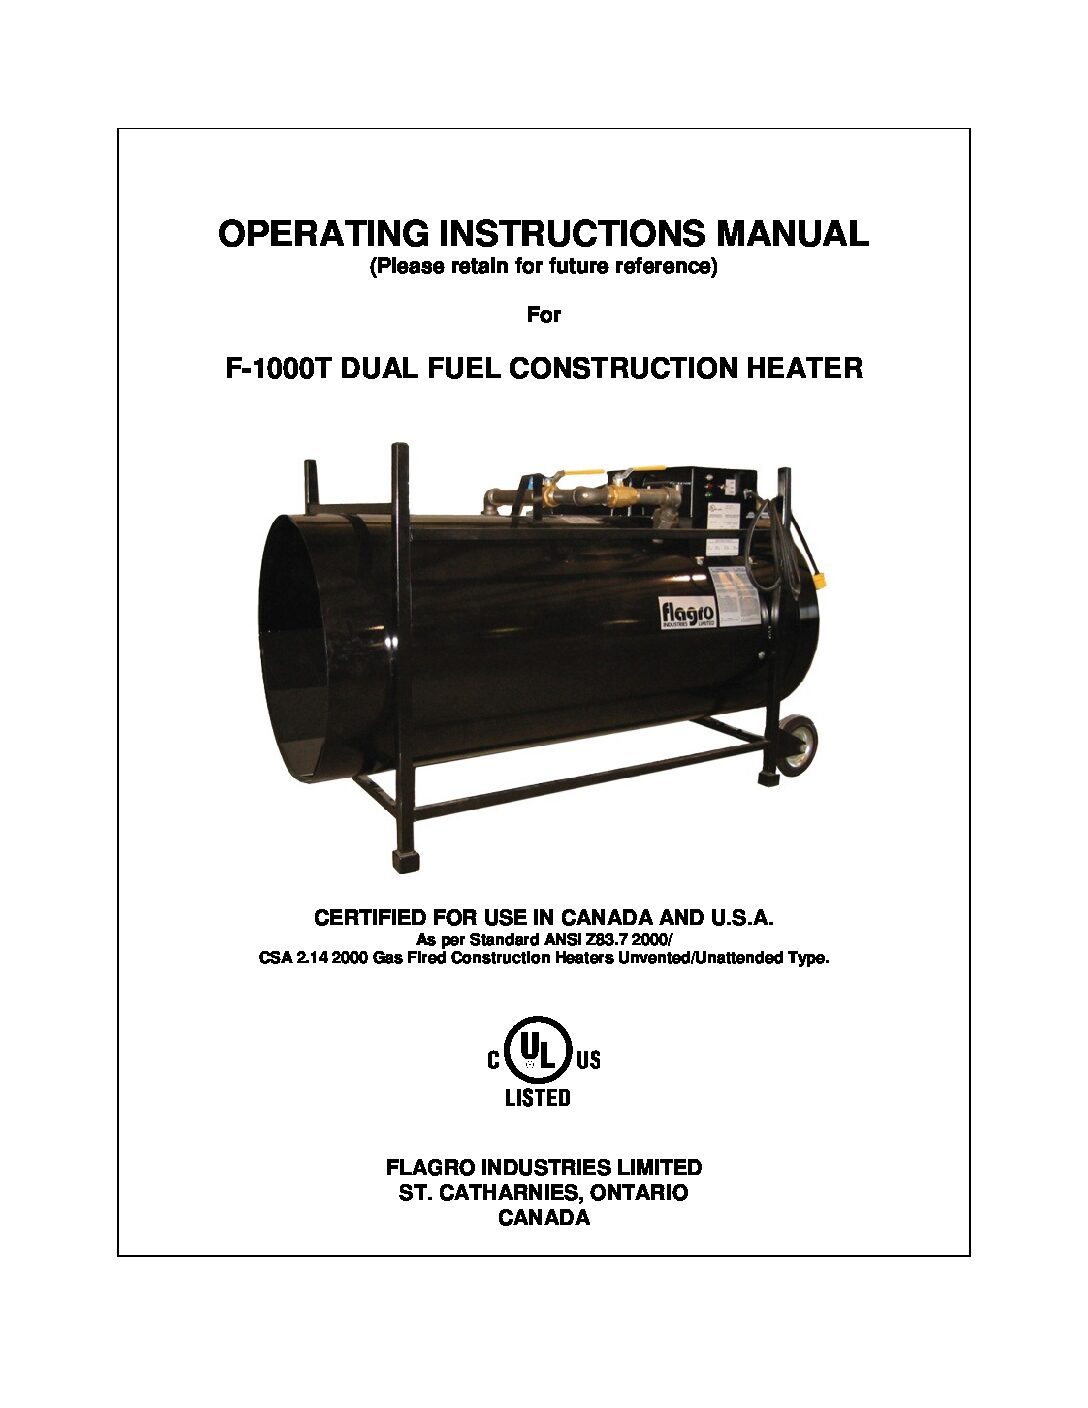 Flagro FLF1000T Operating Instructions Manual